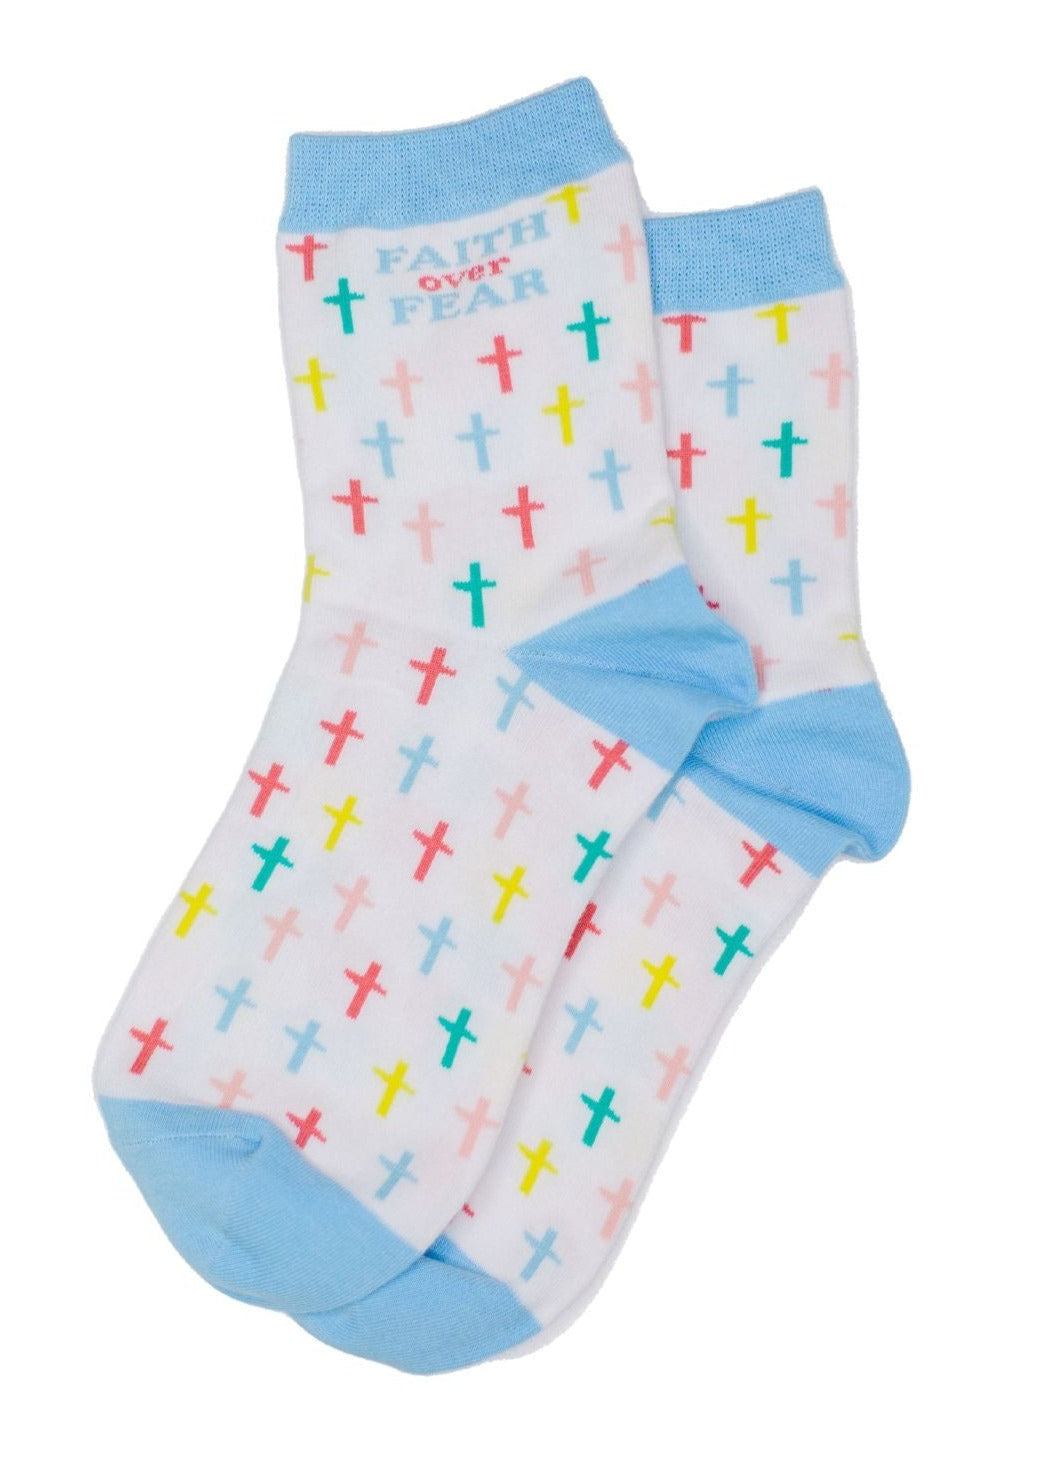 Inspirational Crew Socks Accessories Mary Square Faith